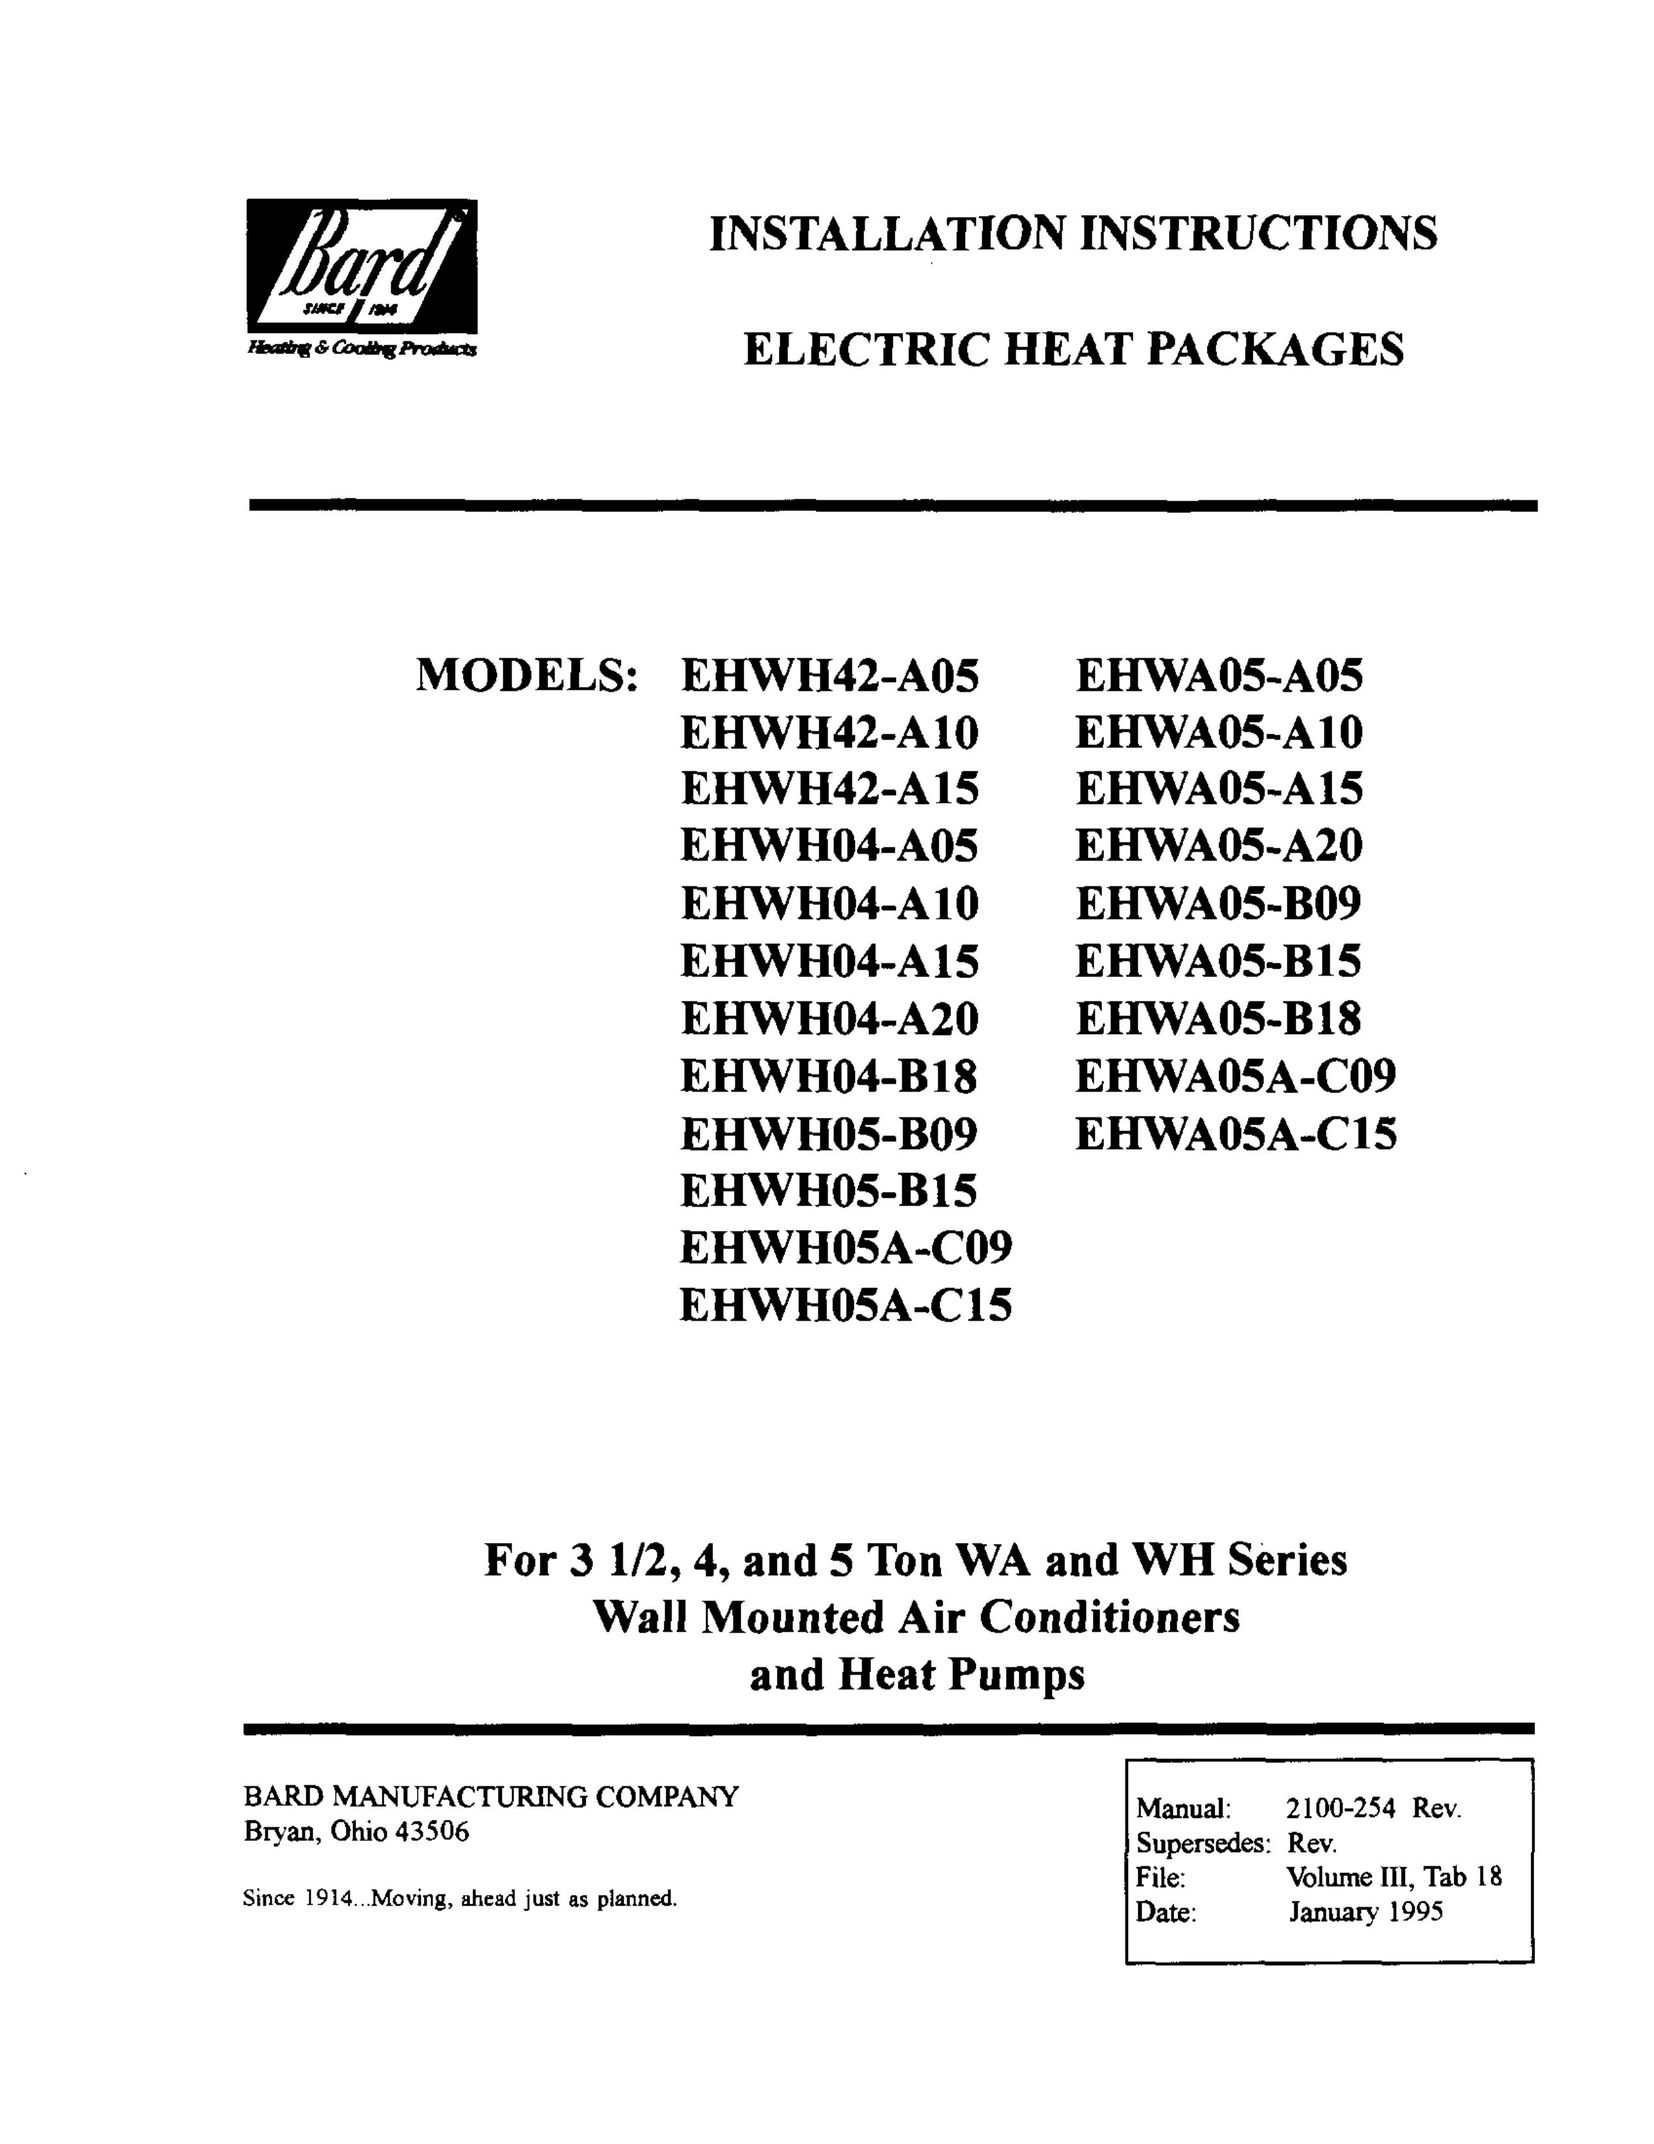 Bard EHWH05A-C15 Heat Gun User Manual